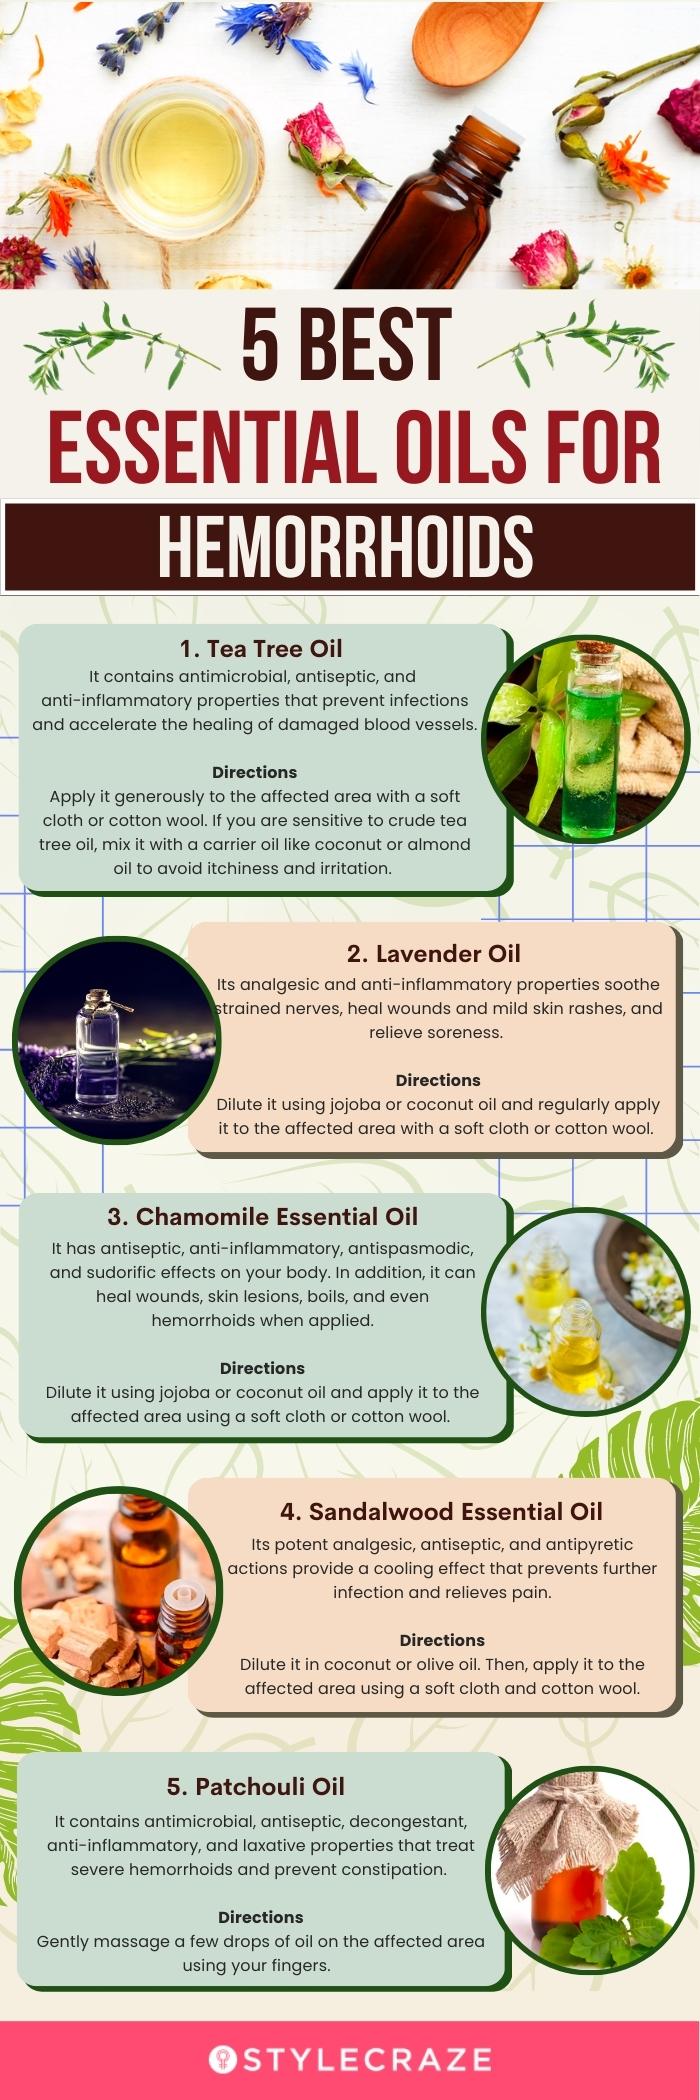 5 best essential oils for hemorrhoids (infographic)